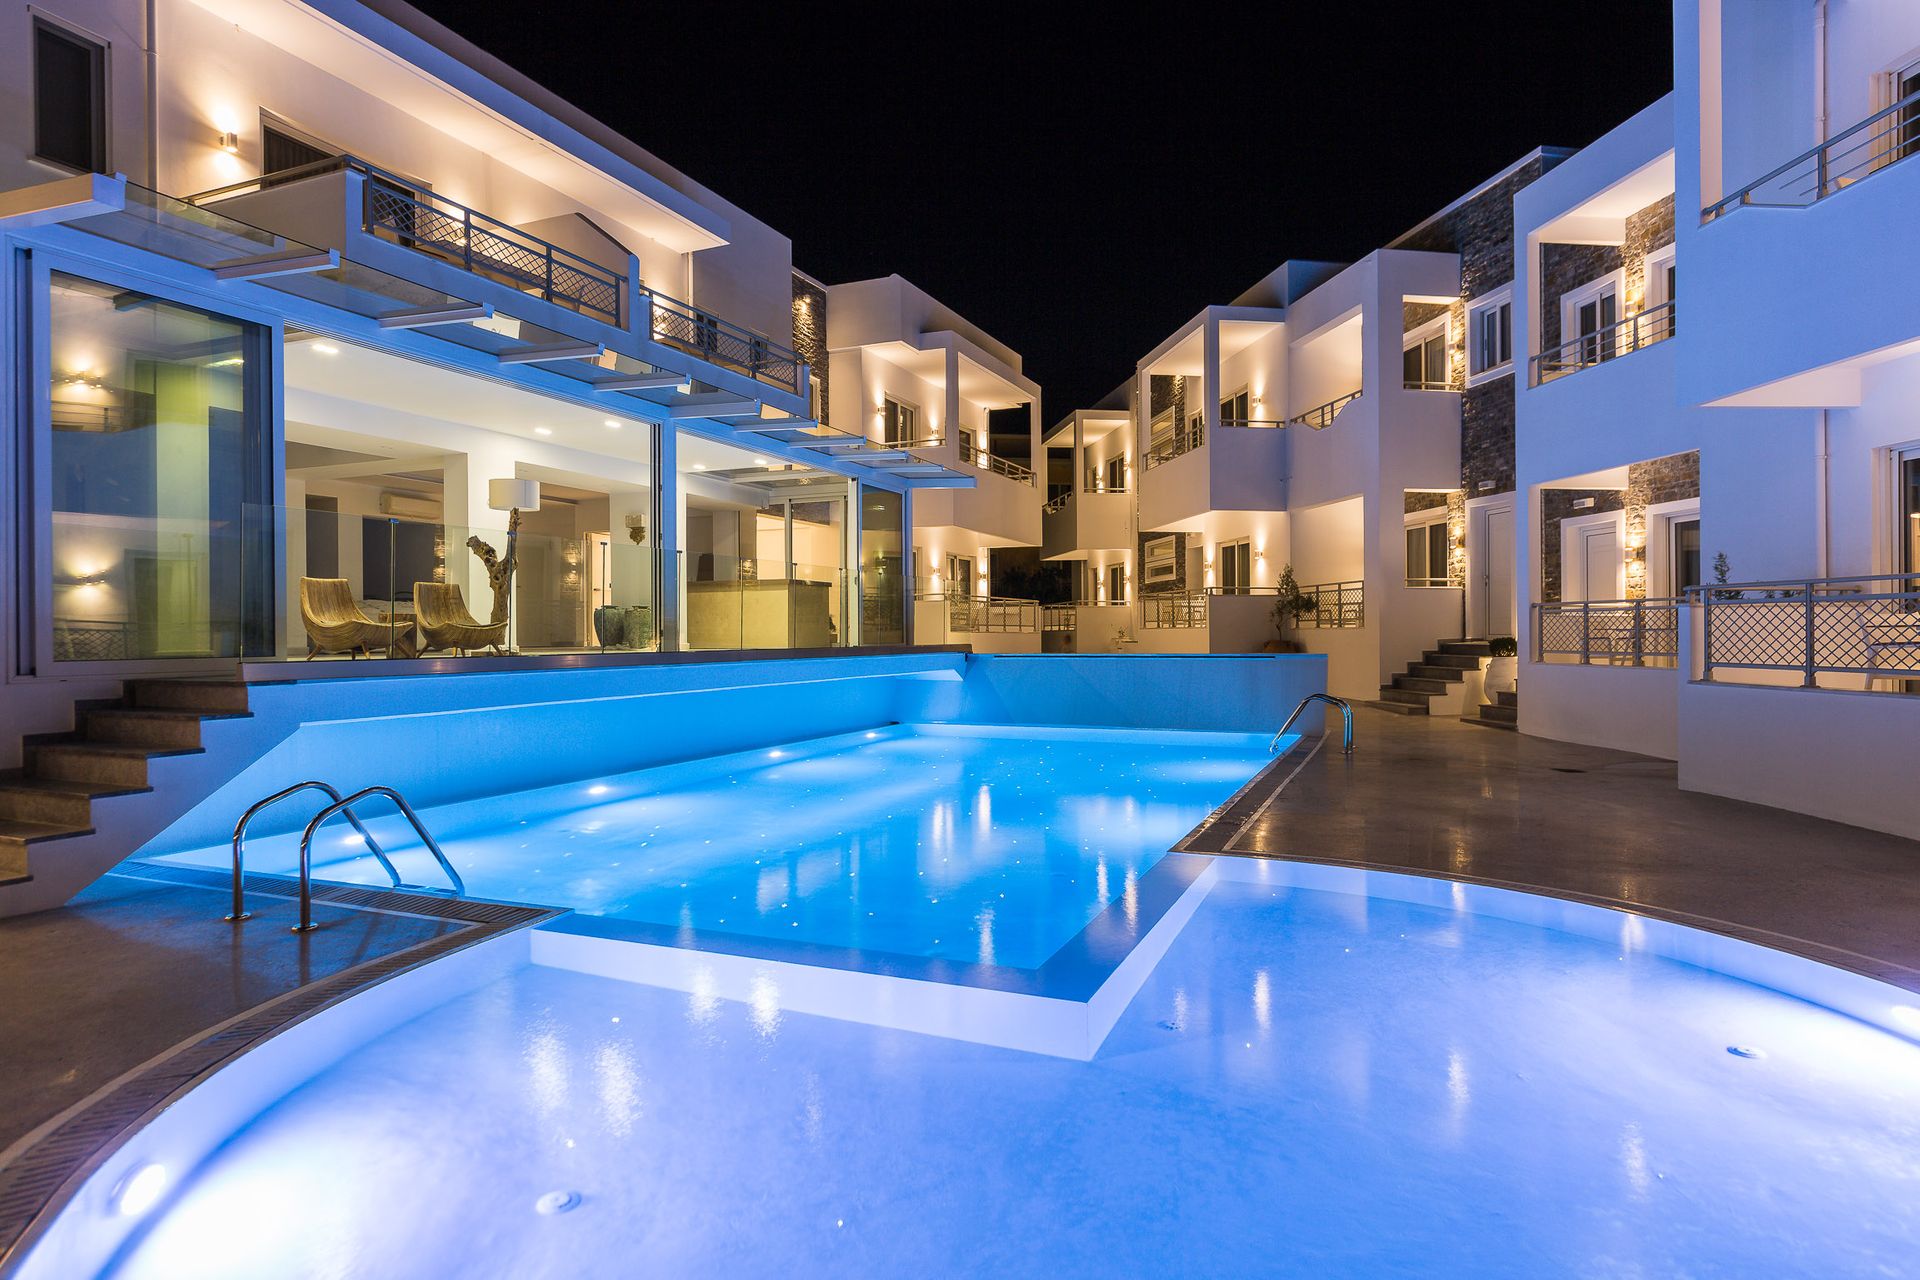 4* Cyano Hotel - Πλακιάς, Κρήτη ✦ 4 Ημέρες (3 Διανυκτερεύσεις) ✦ 2 άτομα ✦ Πρωινό ✦ 01/05/2022 έως 30/09/2022 ✦ Κοντά σε παραλία!